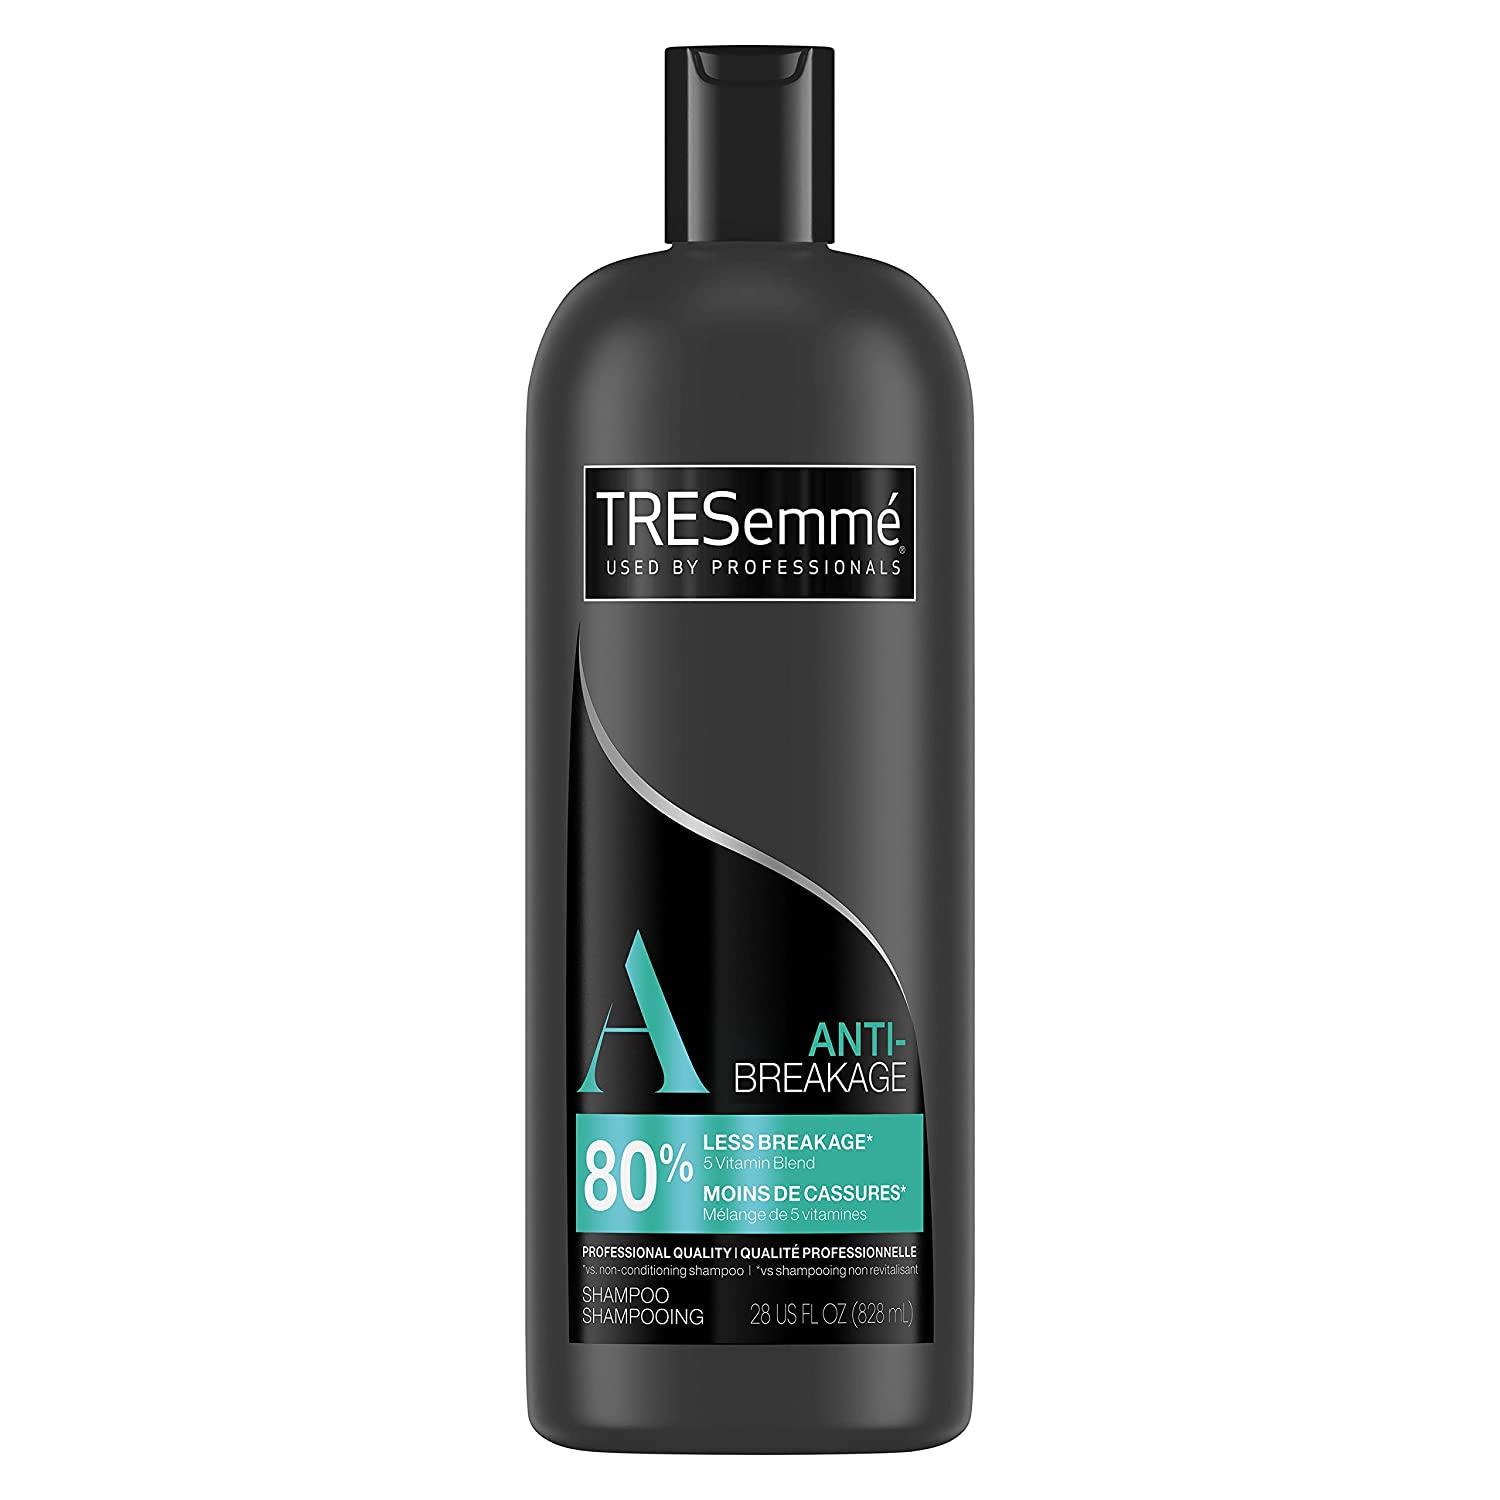 TRESemme Anti-Breakage Shampoo for $2.50 Shipped